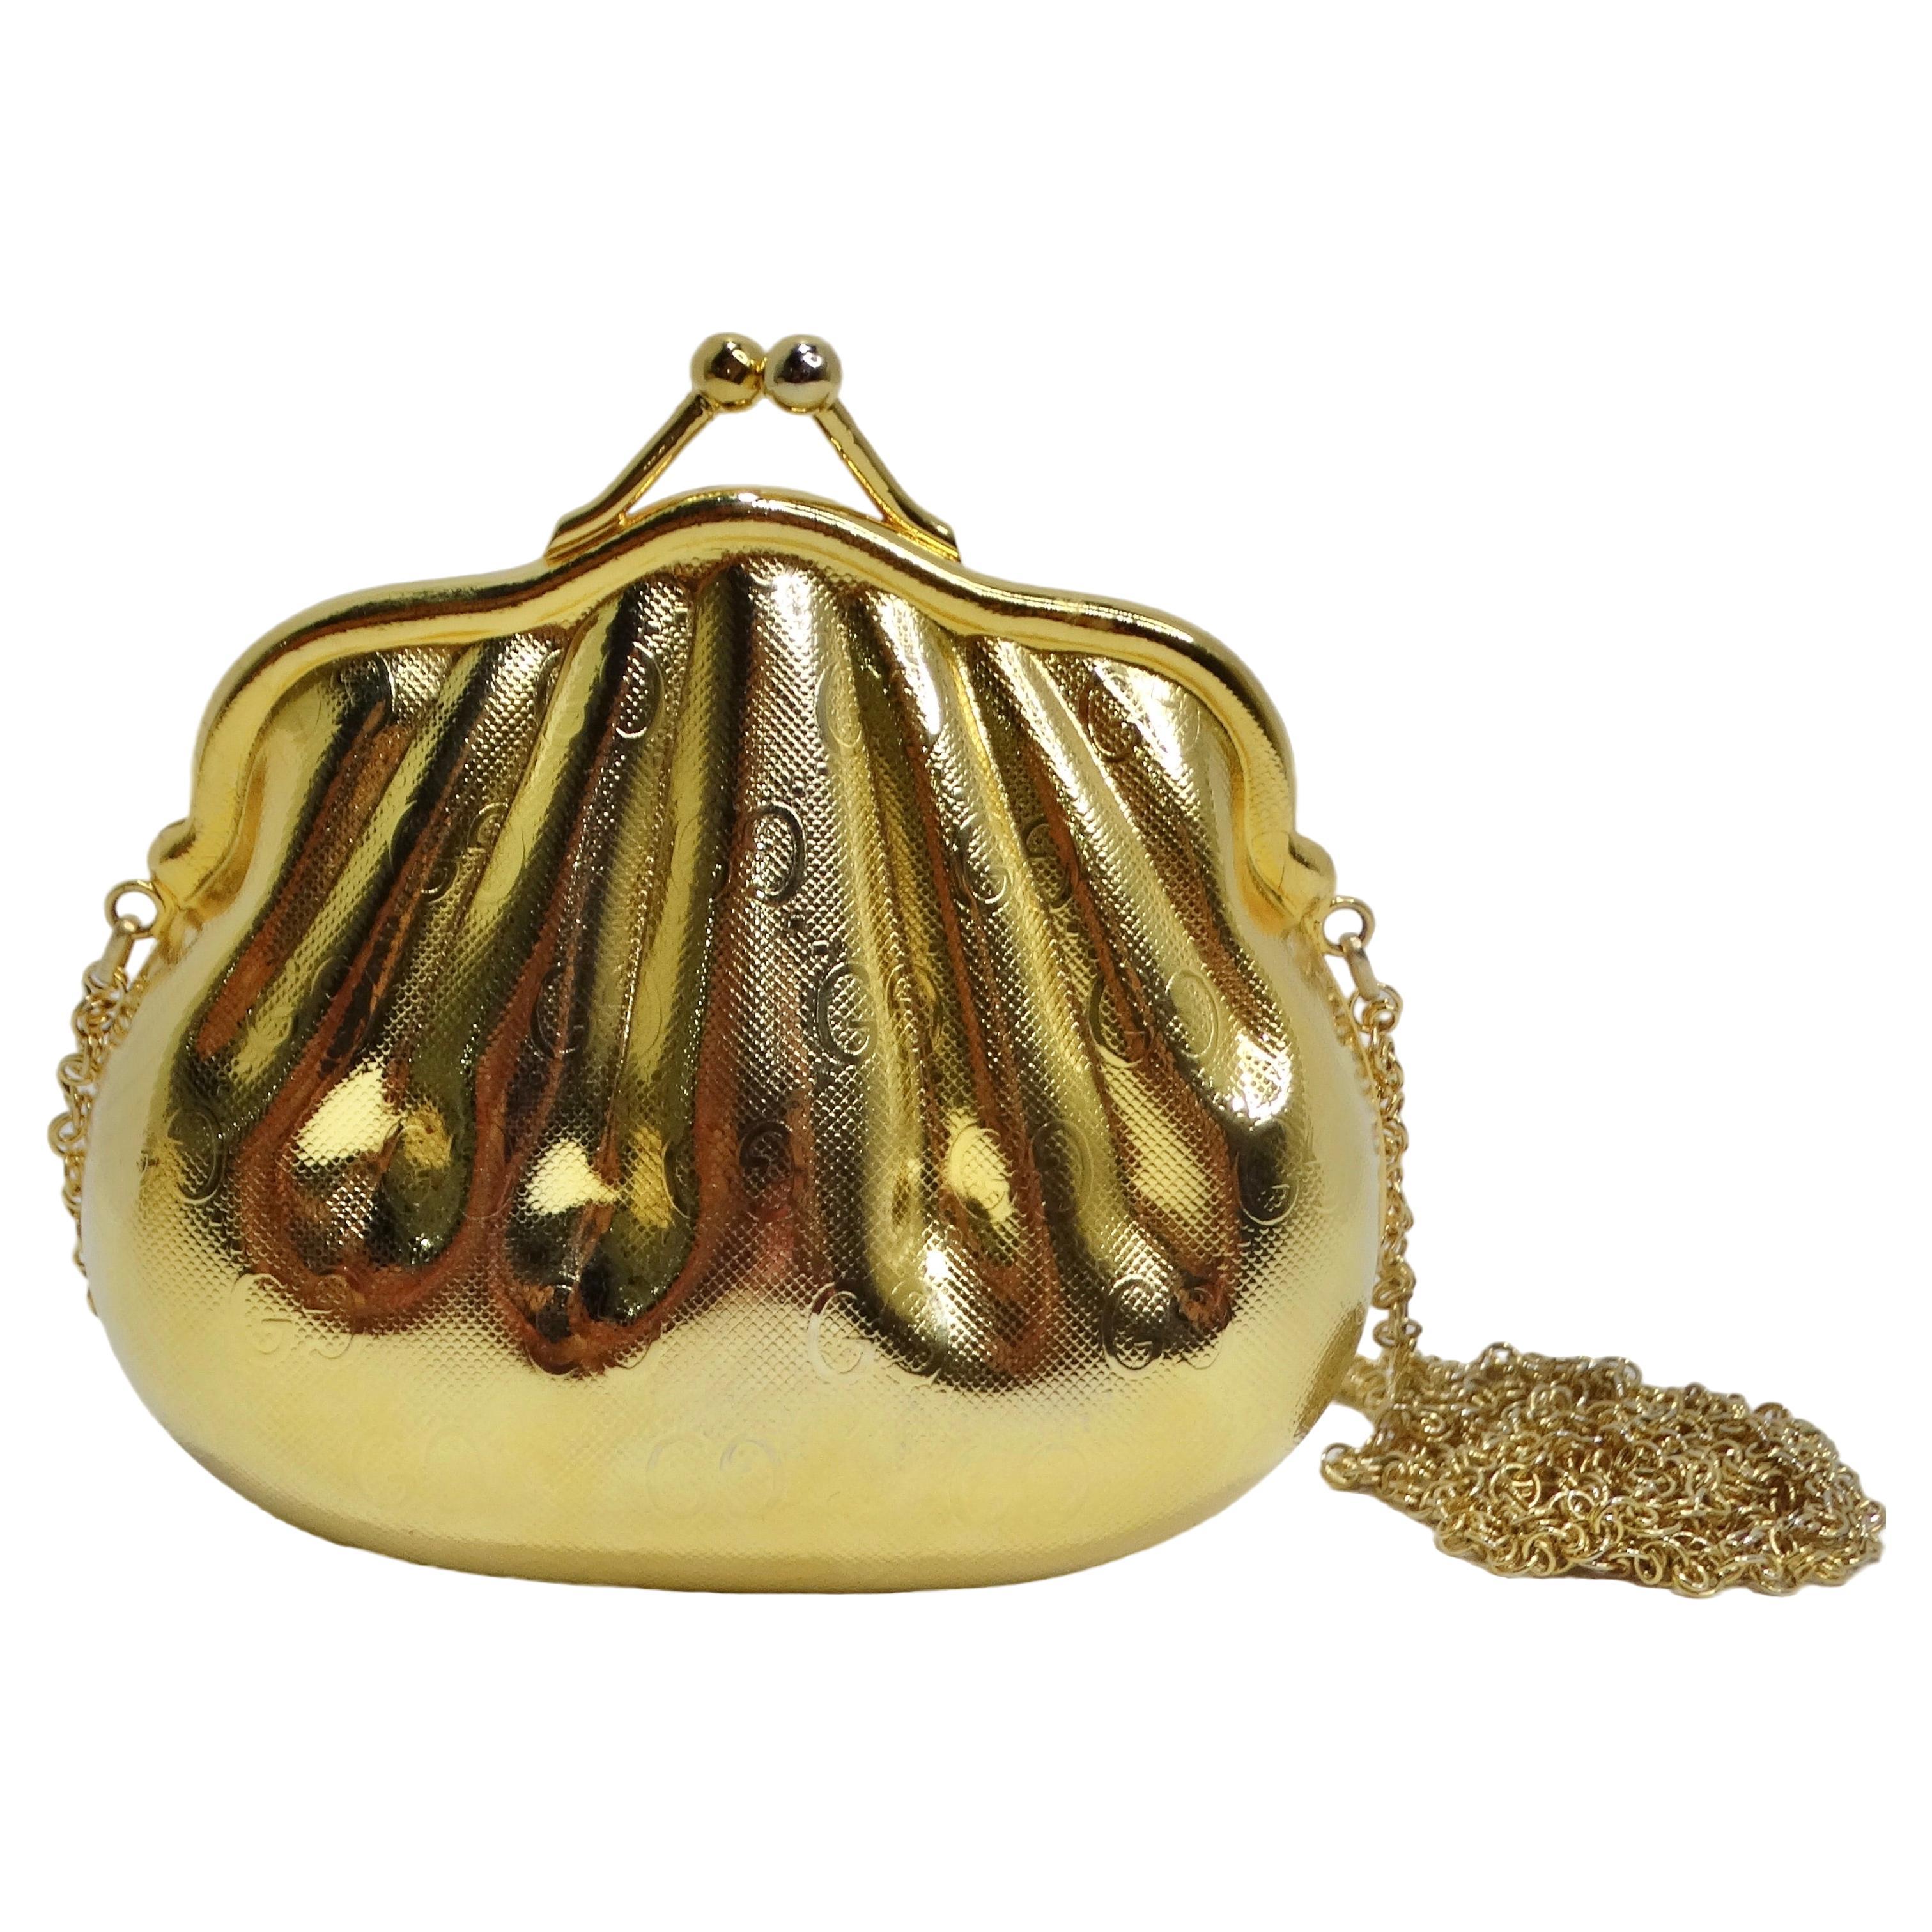 Cartier Evening Gold Bag - 16 For Sale on 1stDibs